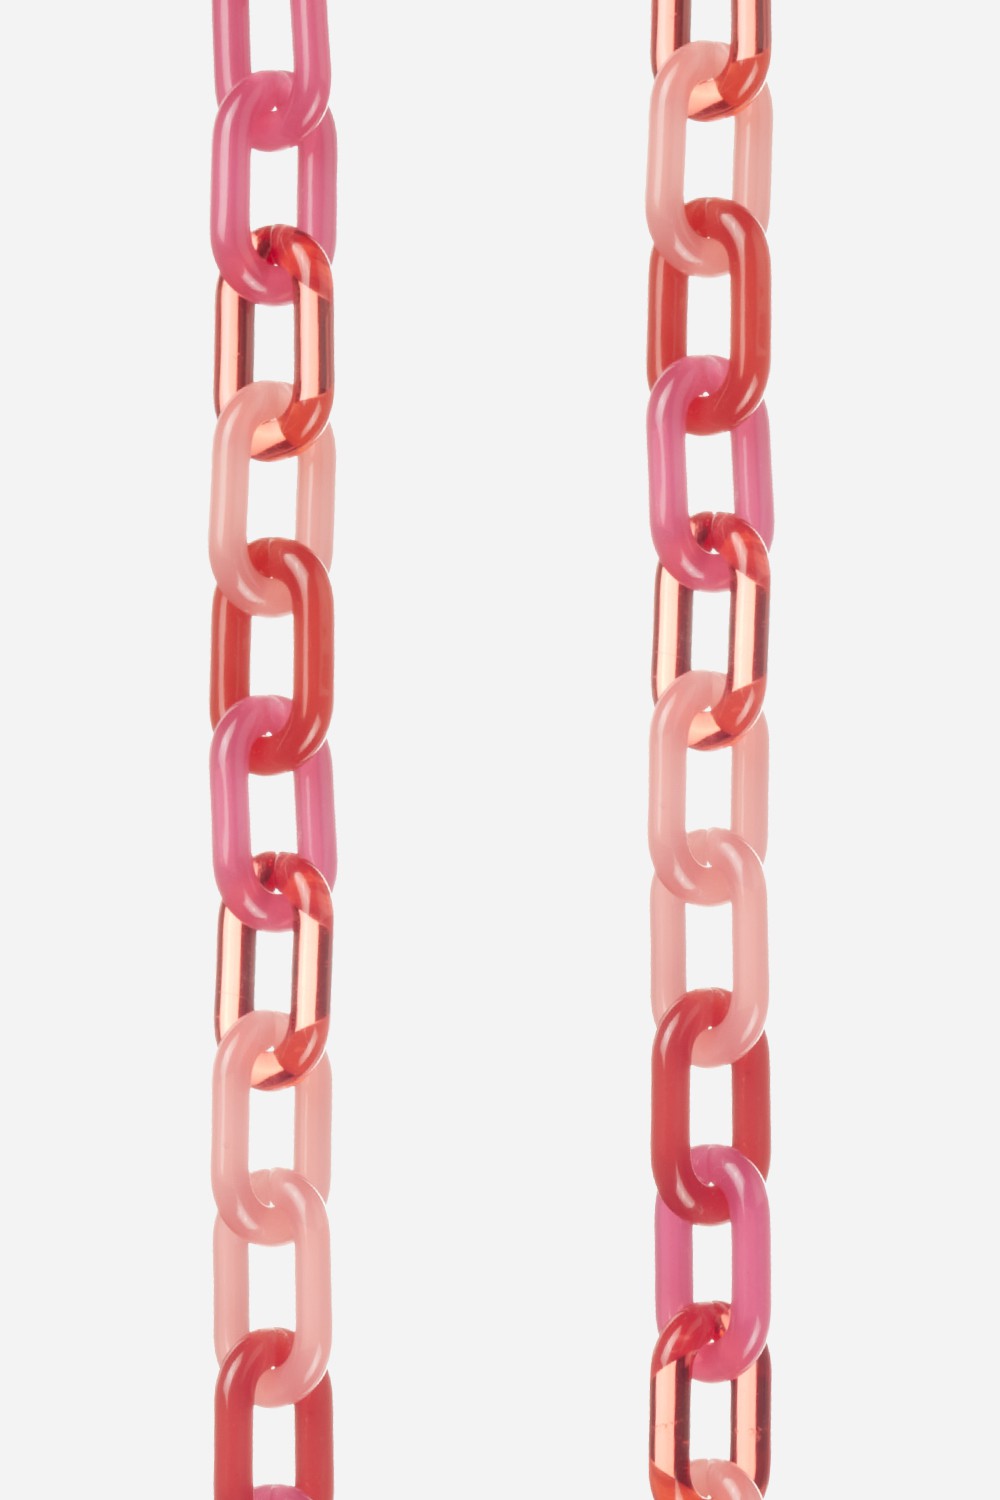 Long Alba Chain Pink 120 cm